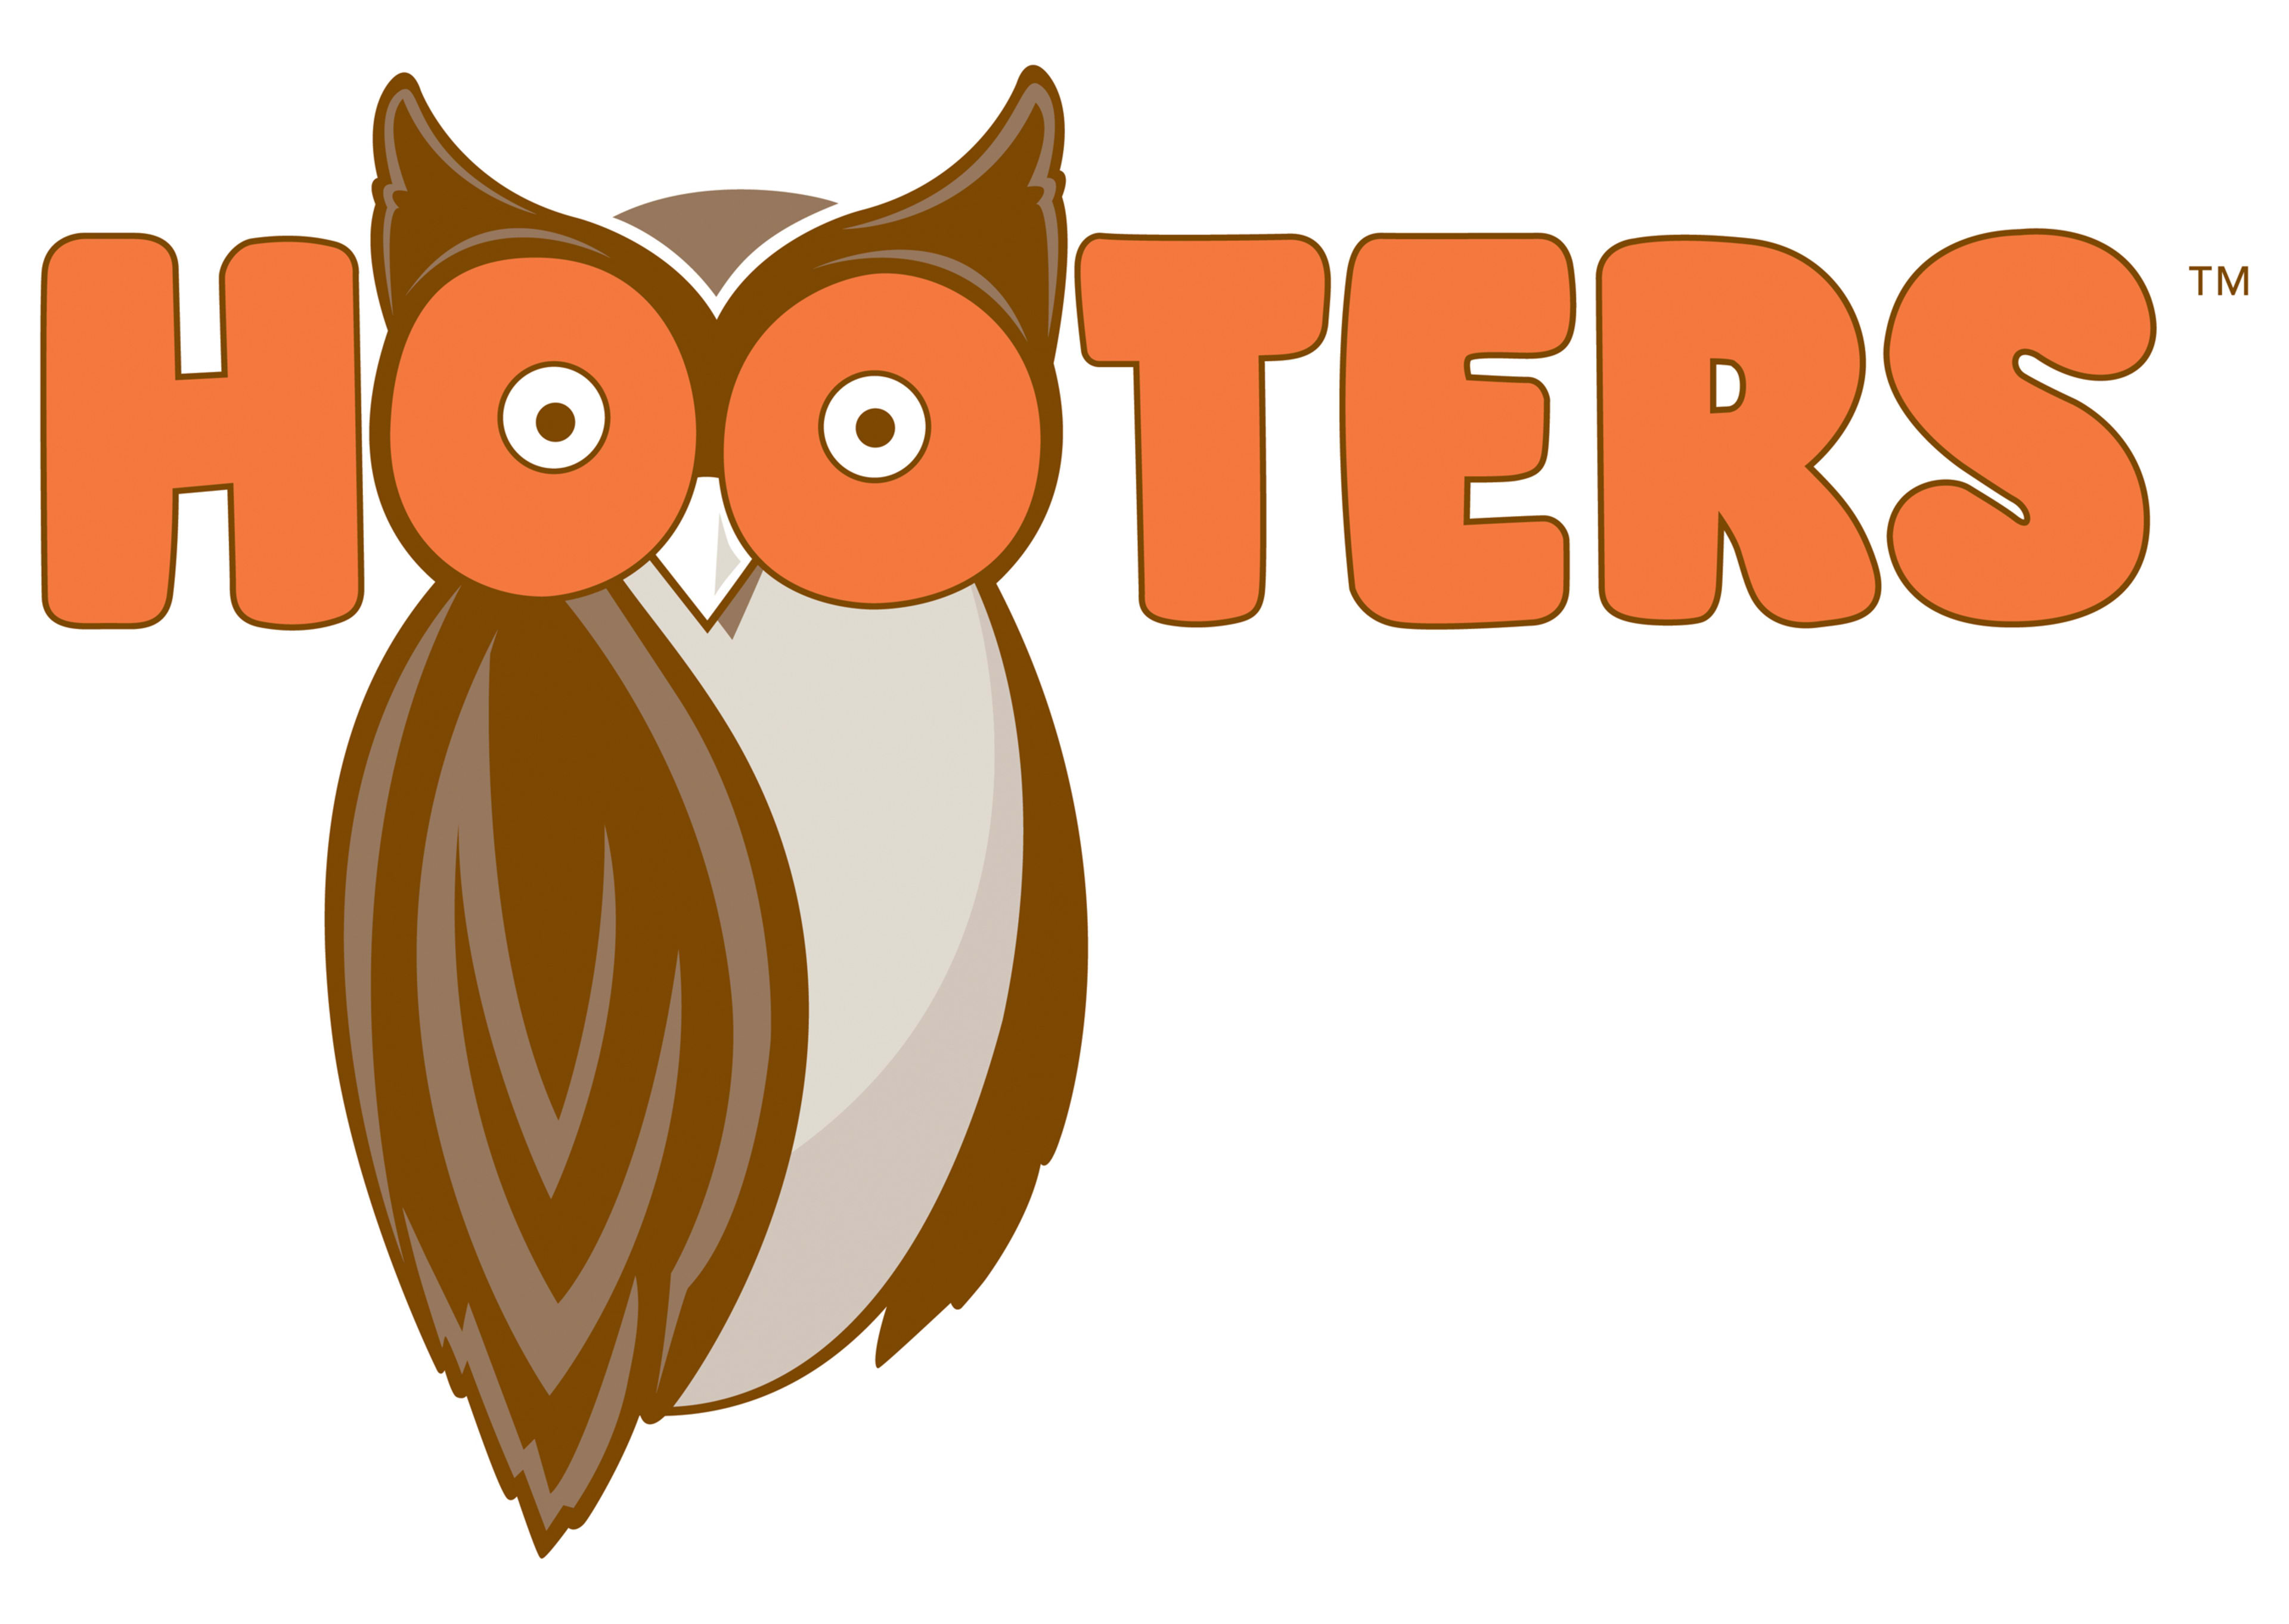 Hooters Code